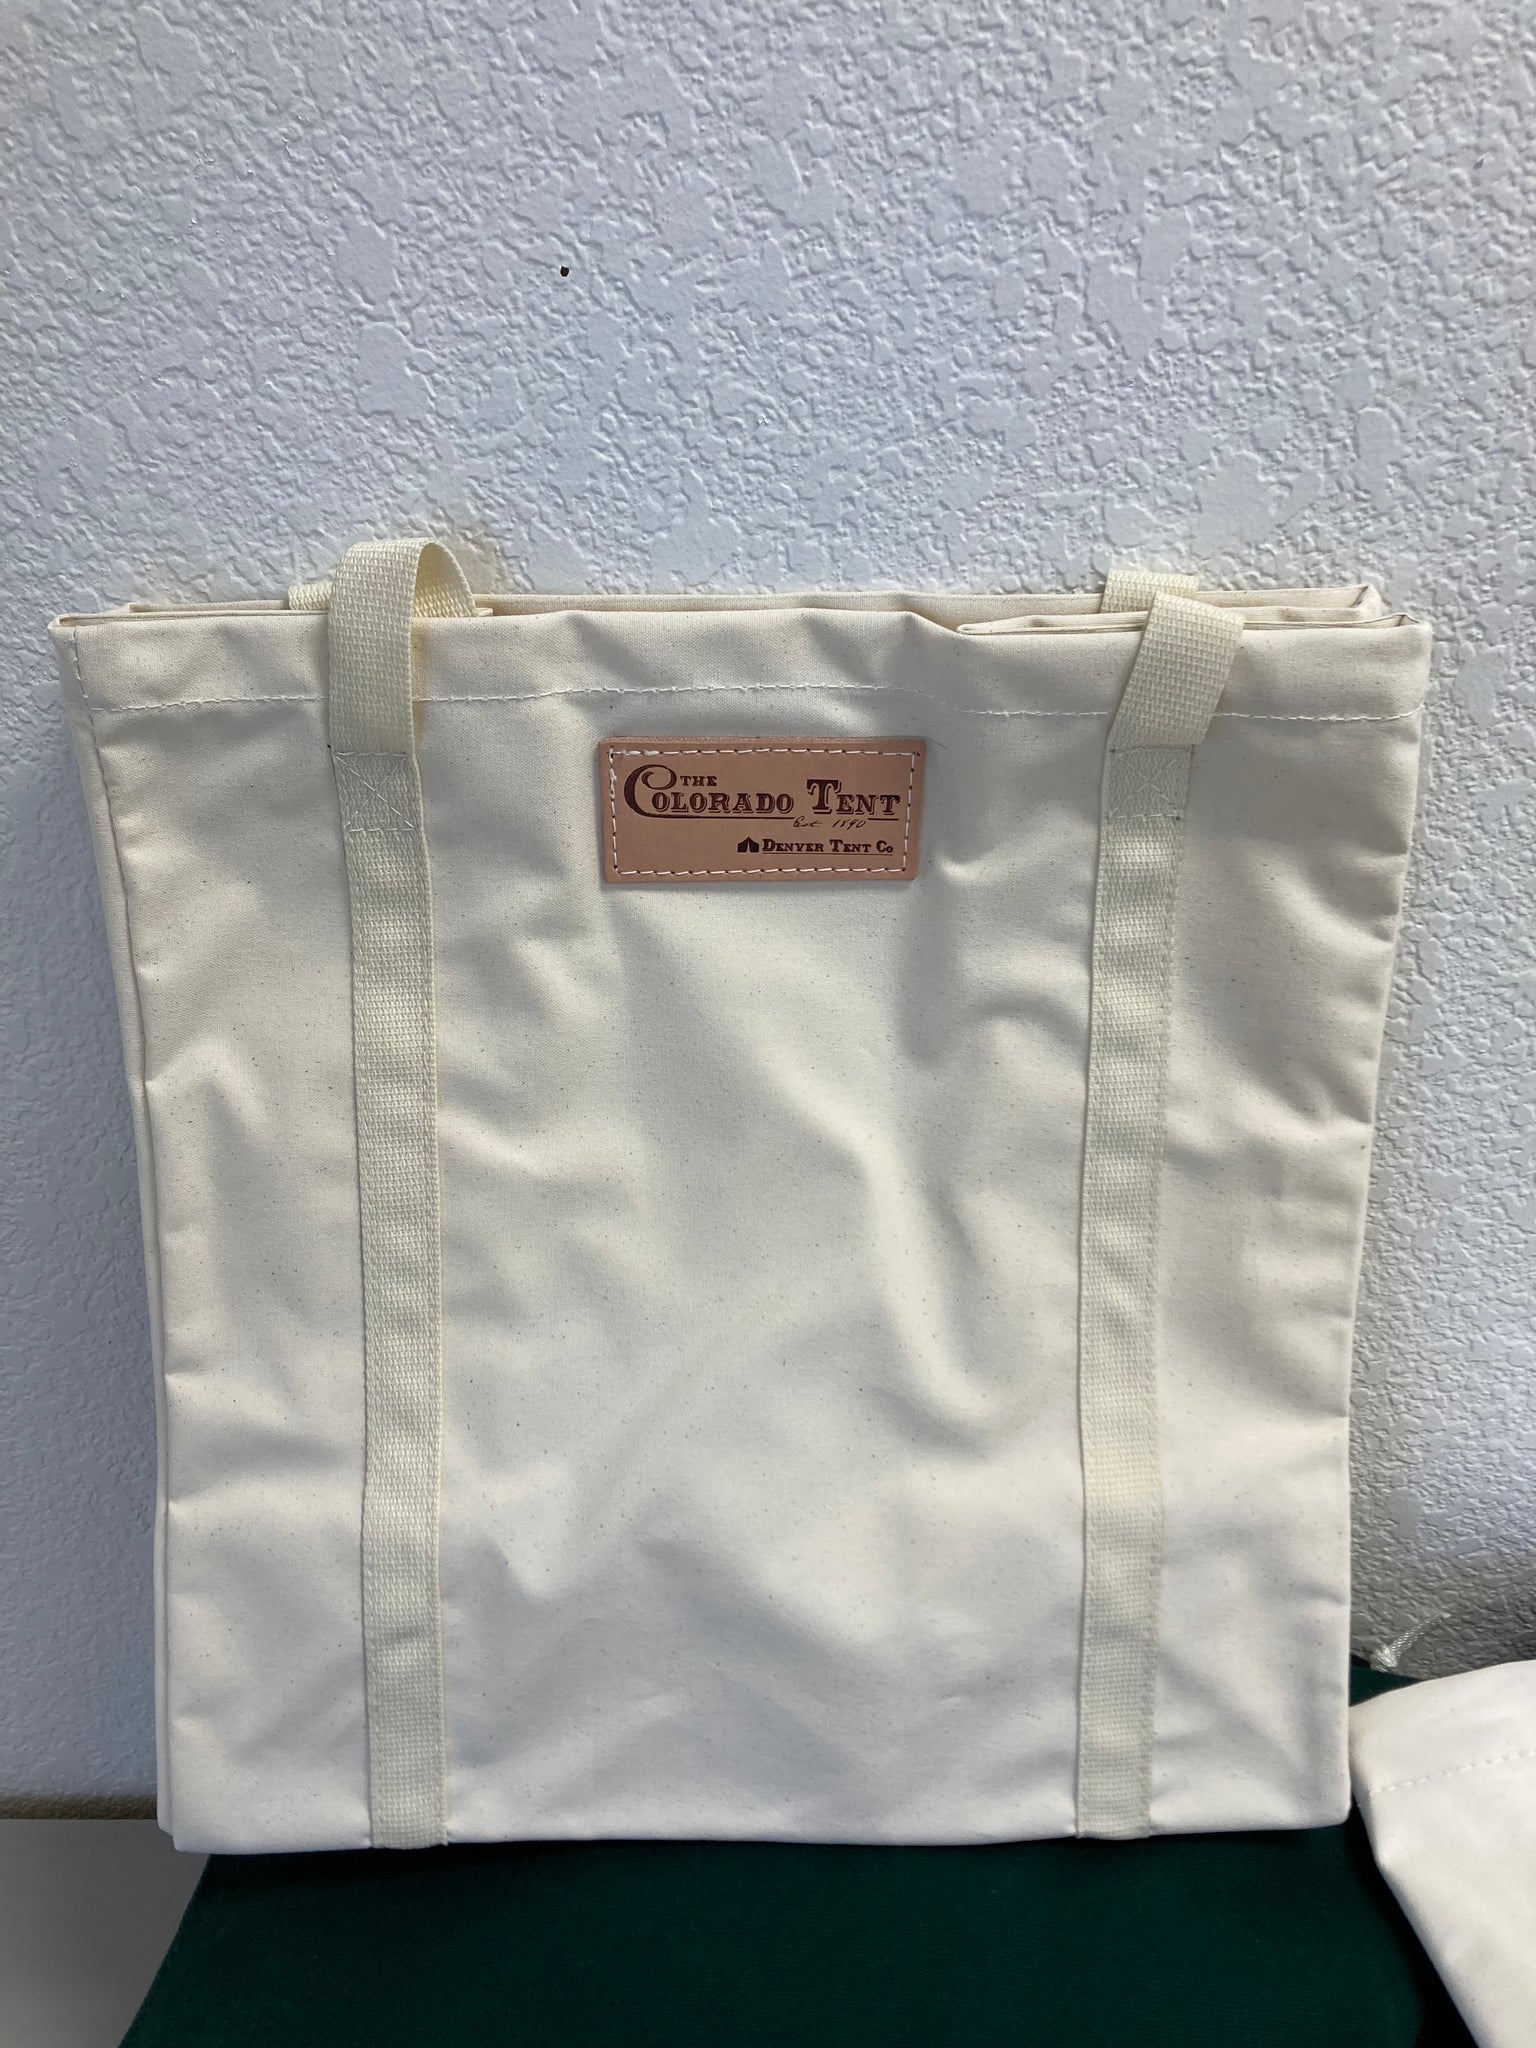 Biome Organic Cotton Canvas Tote Shopping Bag - Natural